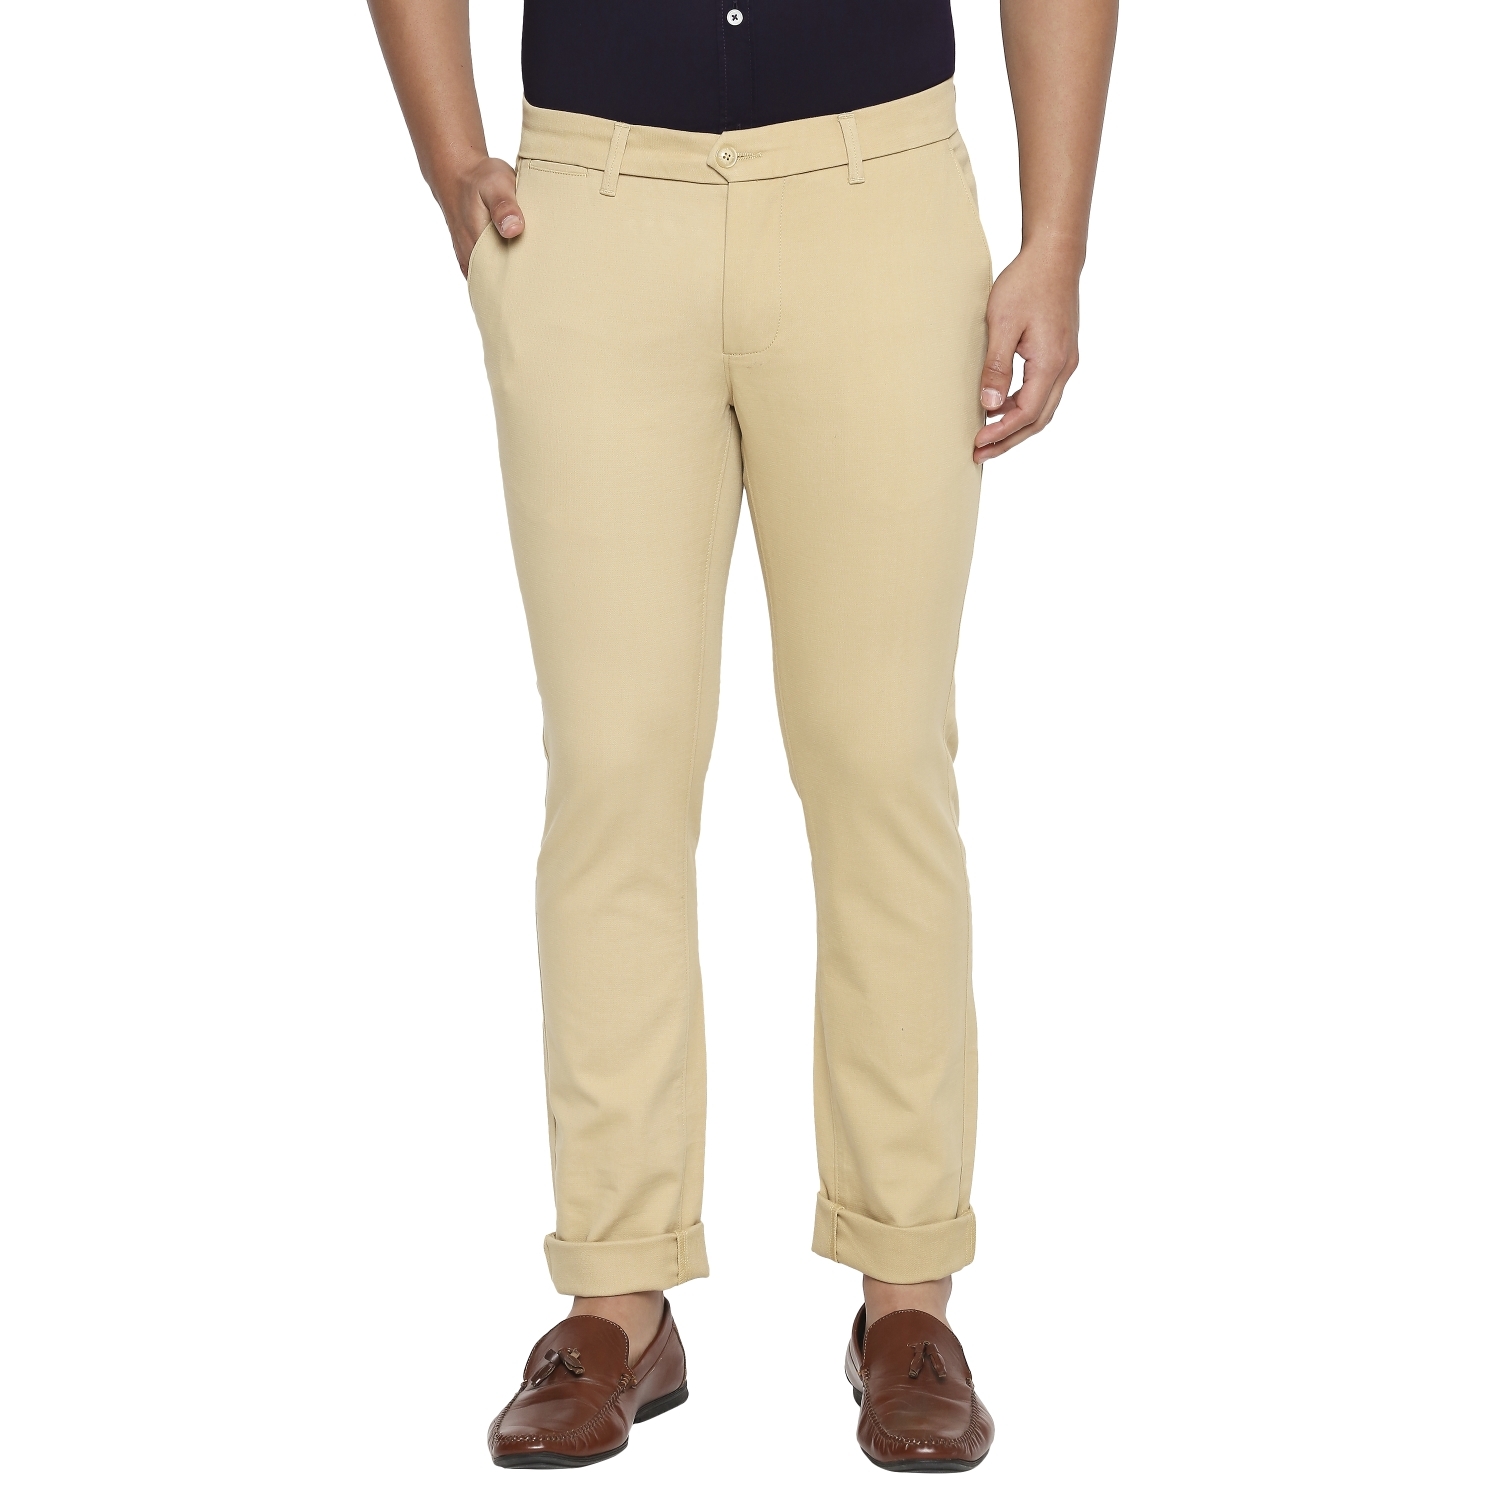 Basics | Basics Tapered Fit Prairie Sand Stretch Trousers